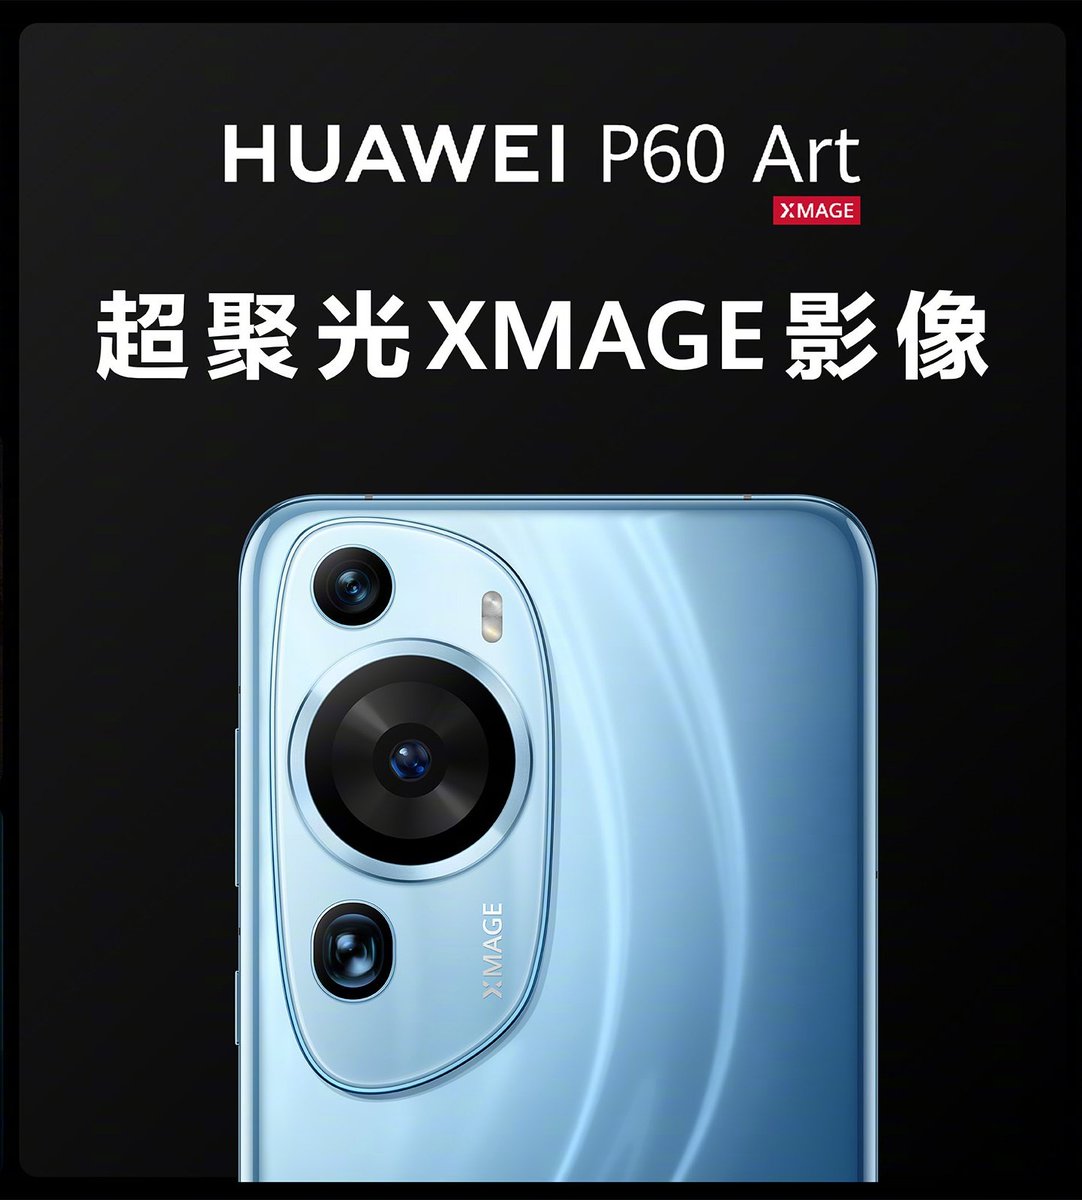 Huawei P60 Art. I don't like this man. I can't see the Art in this device. #Huawei #HuaweiP60Art